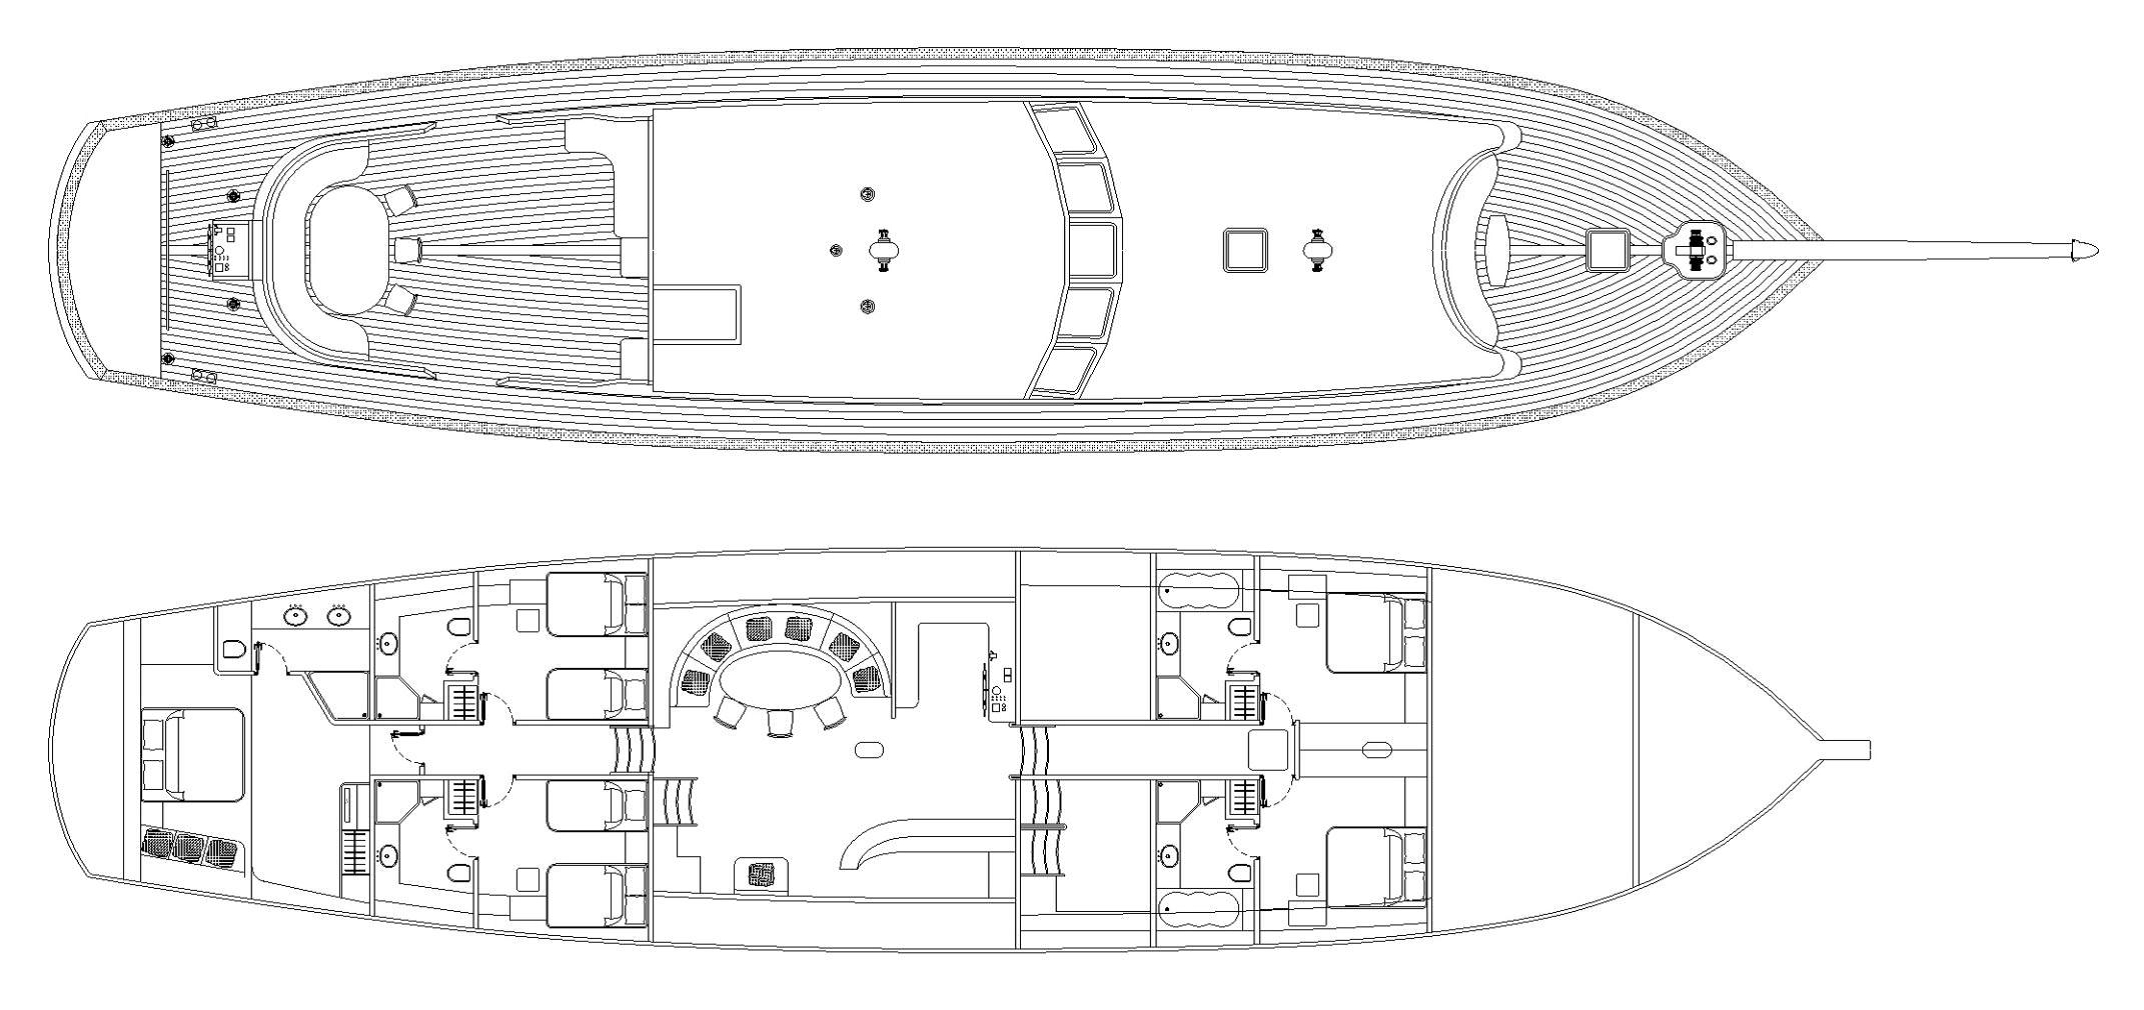 The 42m Yacht HIC SALTA